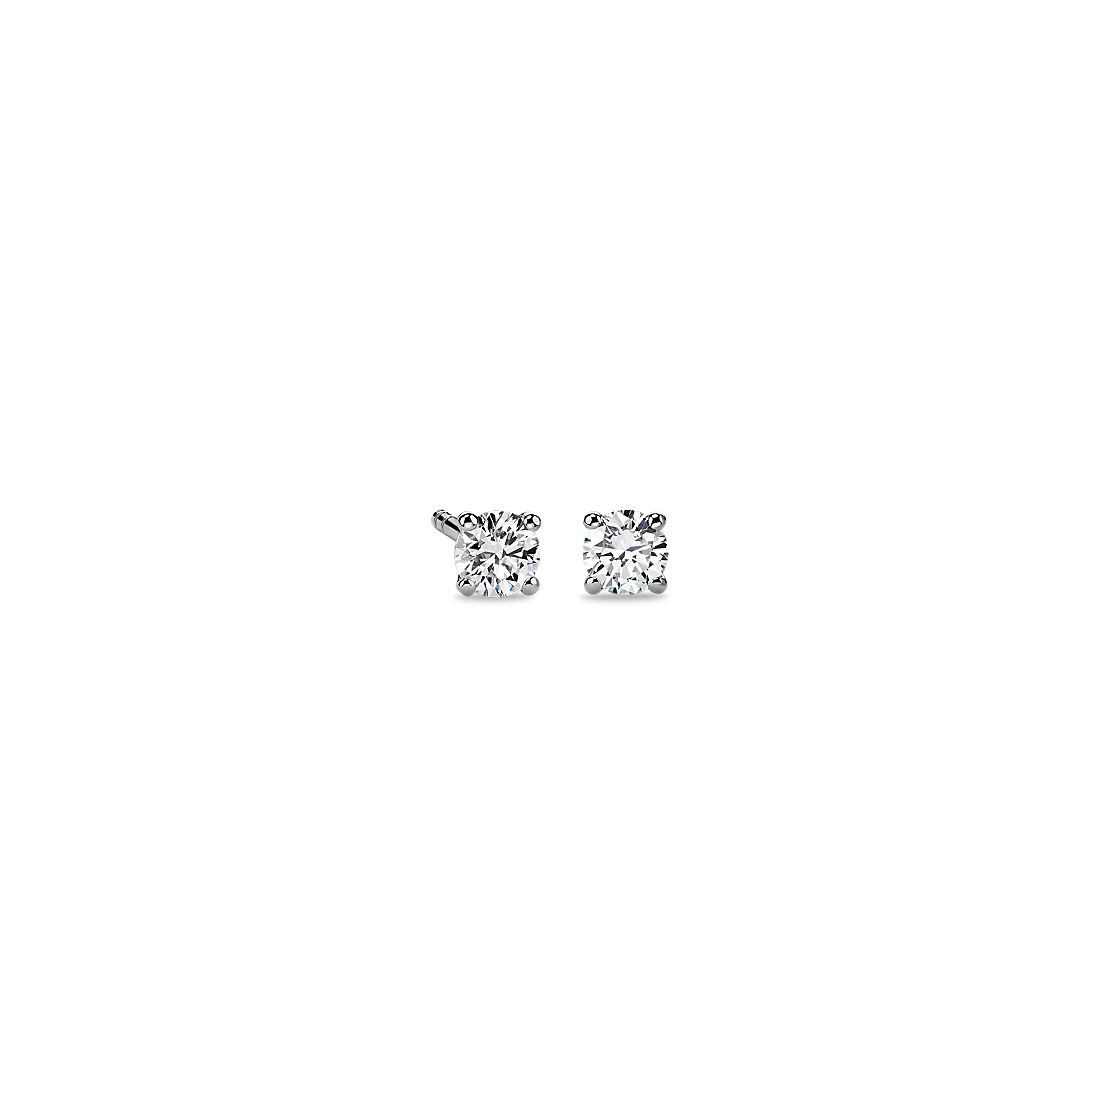 Canadian Diamond Stud Earrings in 18k White Gold (0.30 ct. tw.)